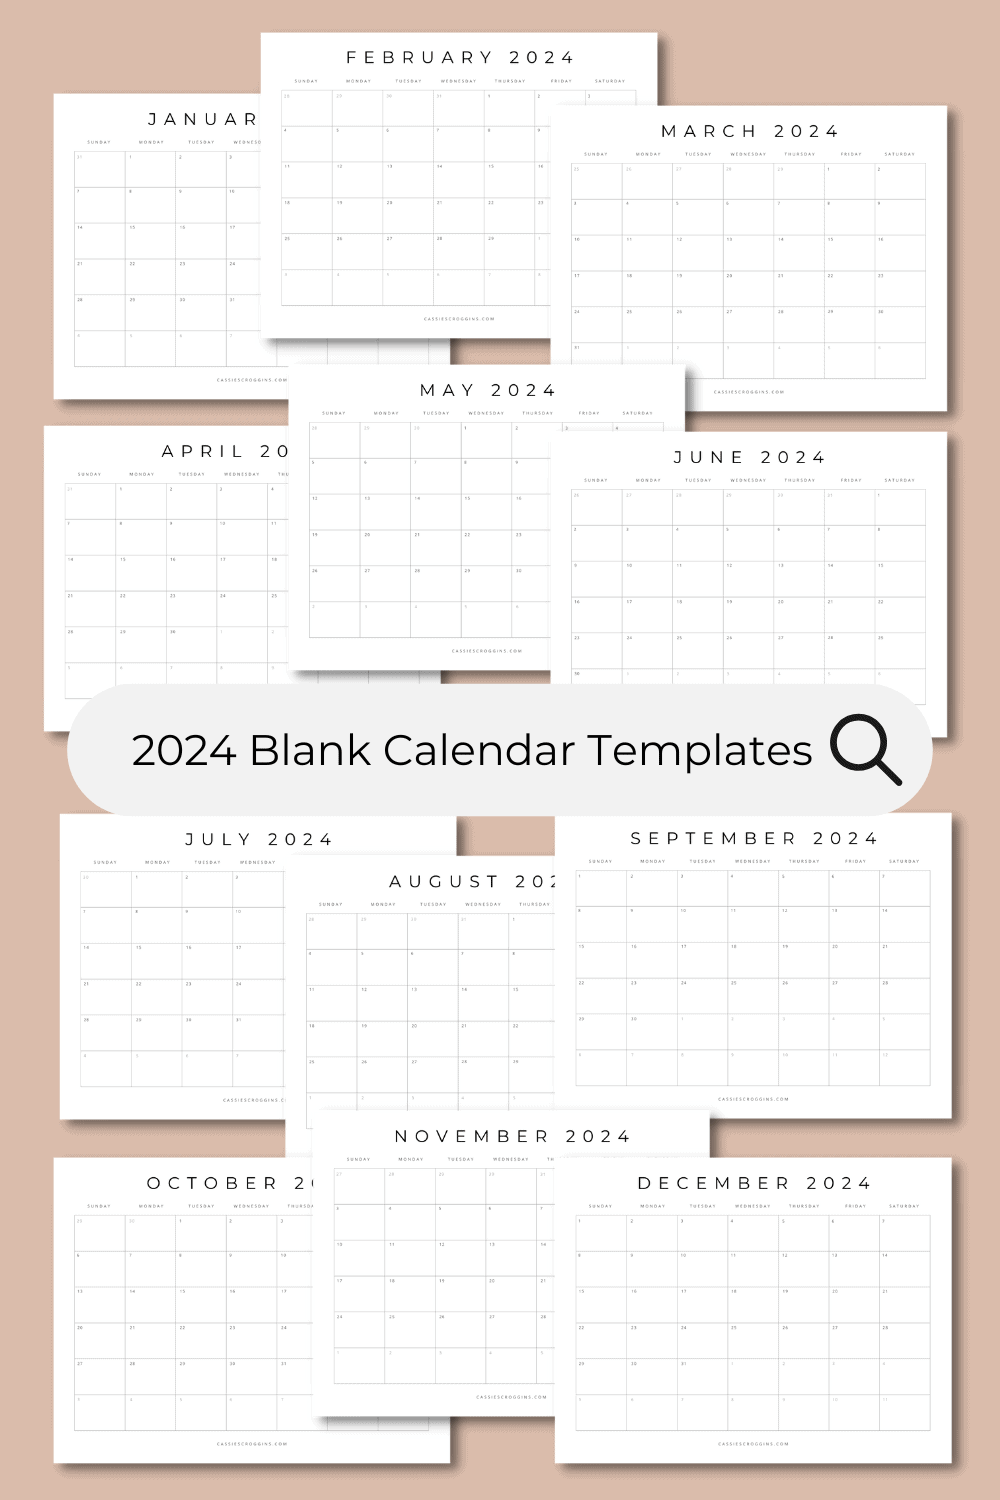 Free Printable 2024 Blank Calendar Templates (All 12 Months) pertaining to Free Printable Blank Monthly Calendar 2024